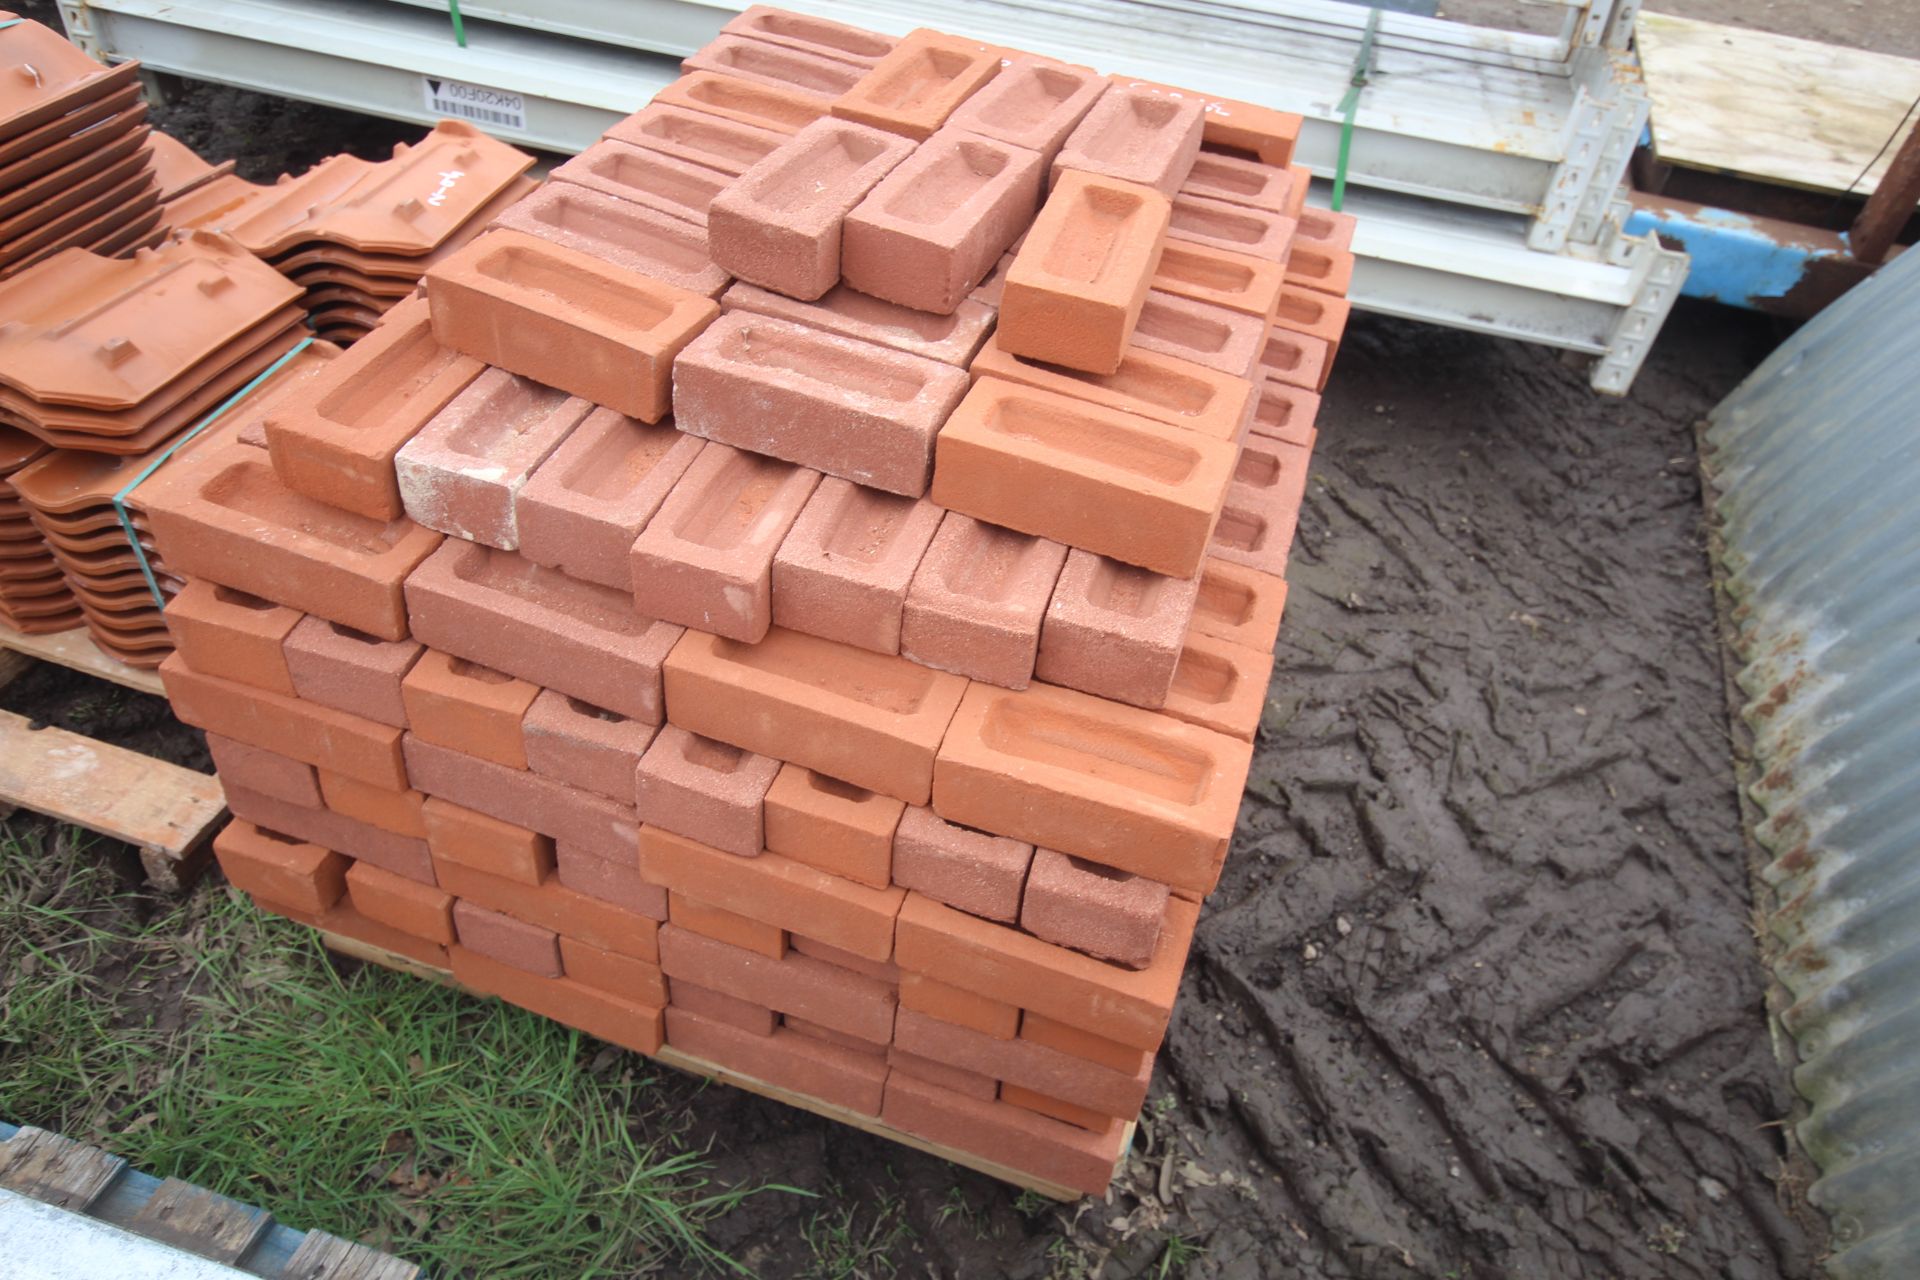 Pallet of bricks. - Image 2 of 2